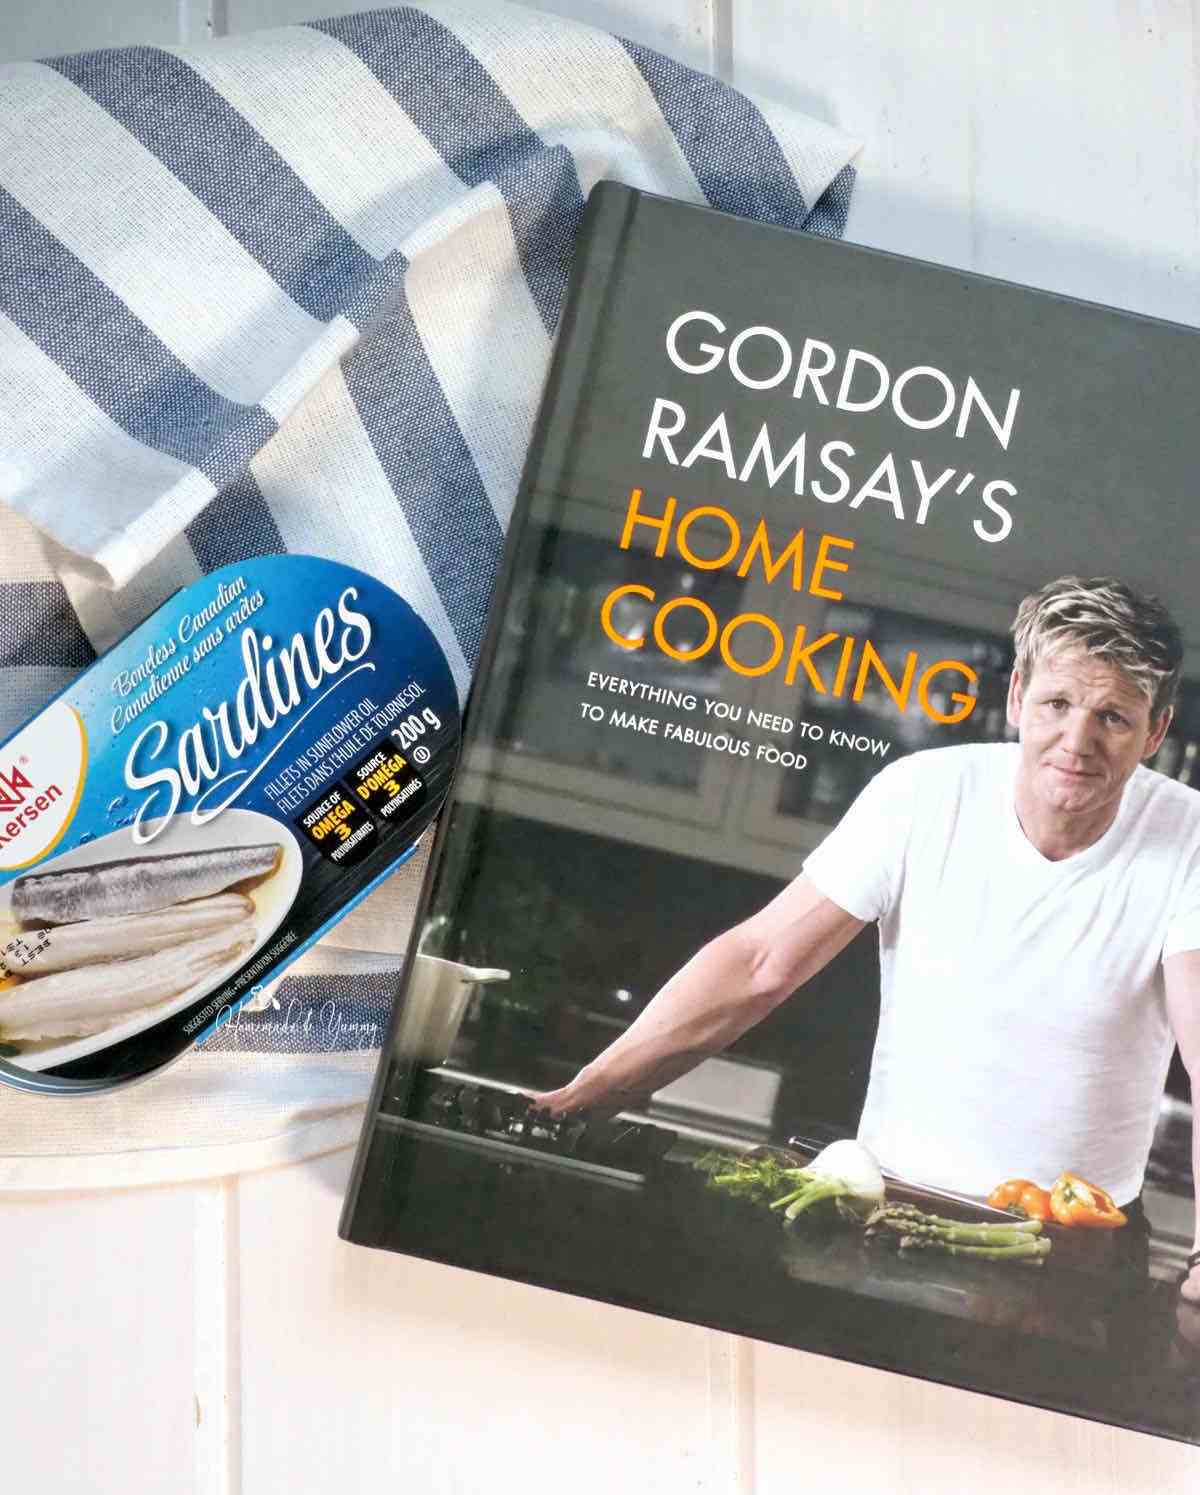 A can of sardines alongside a Gordon Ramsay cookbook.